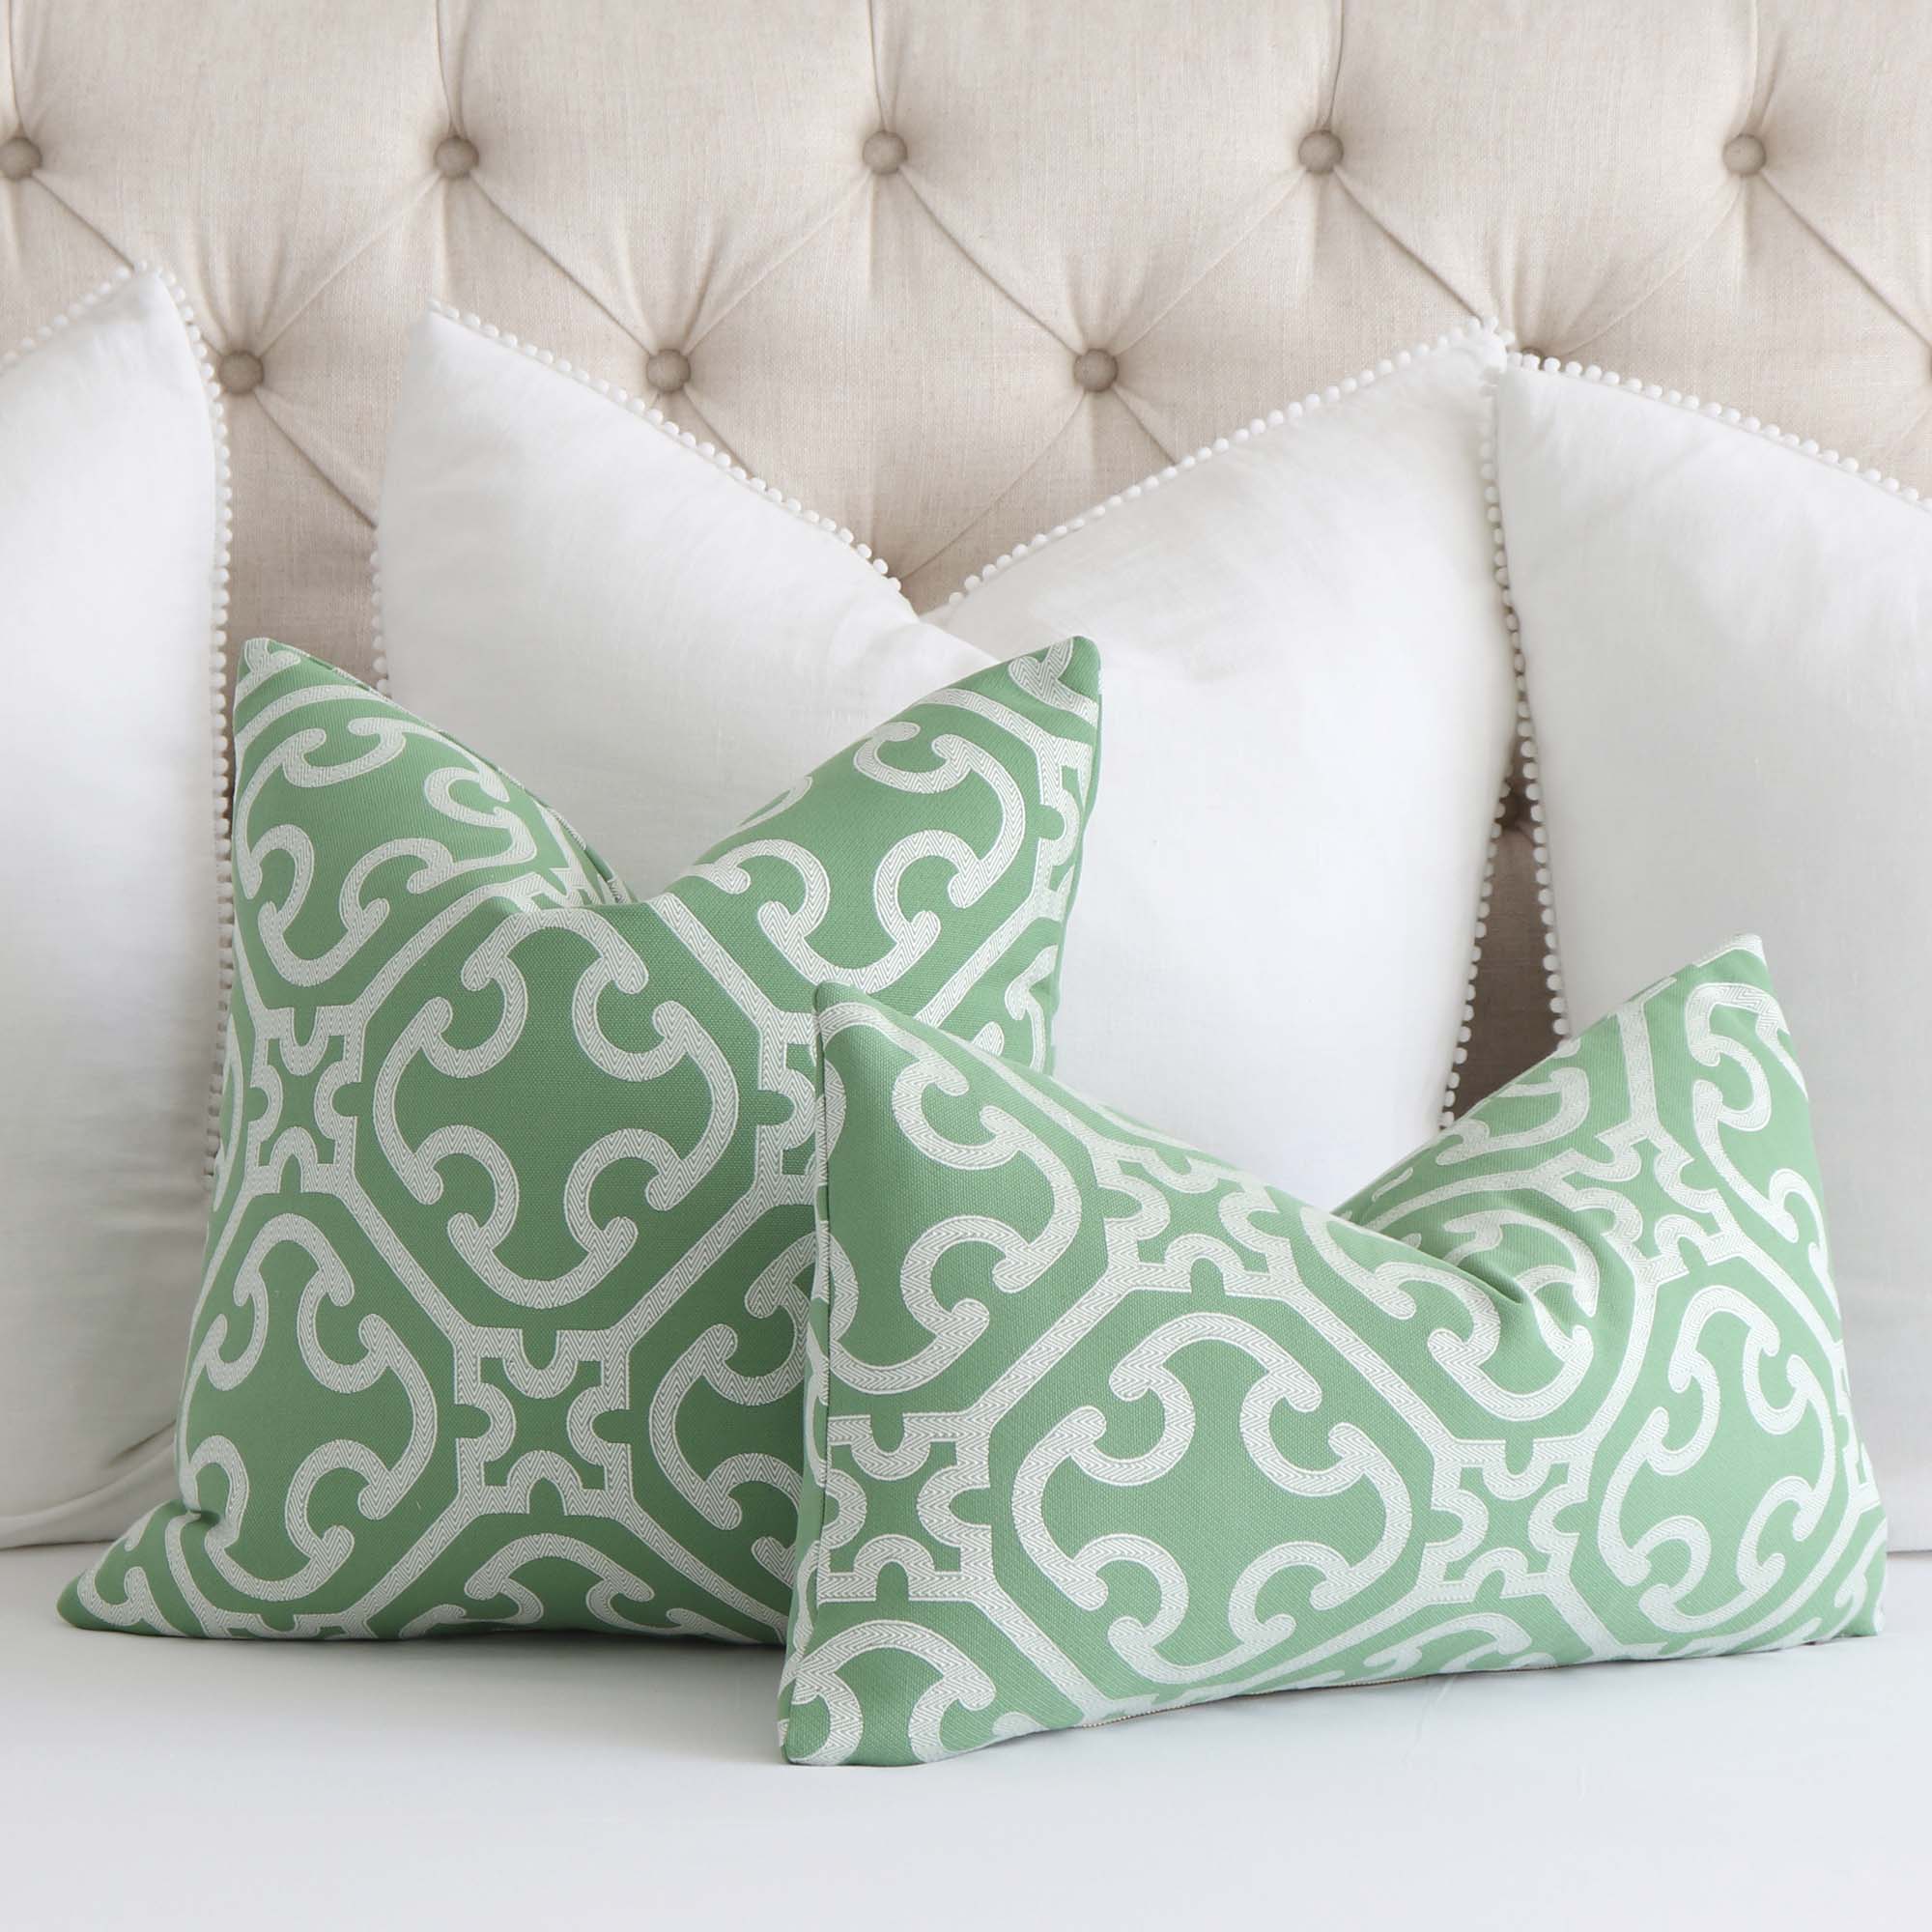 Scalamandre Ailin Lattice Weave Jade Green Luxury Designer Decorative Throw Pillow Cover with Big White Euro Shams